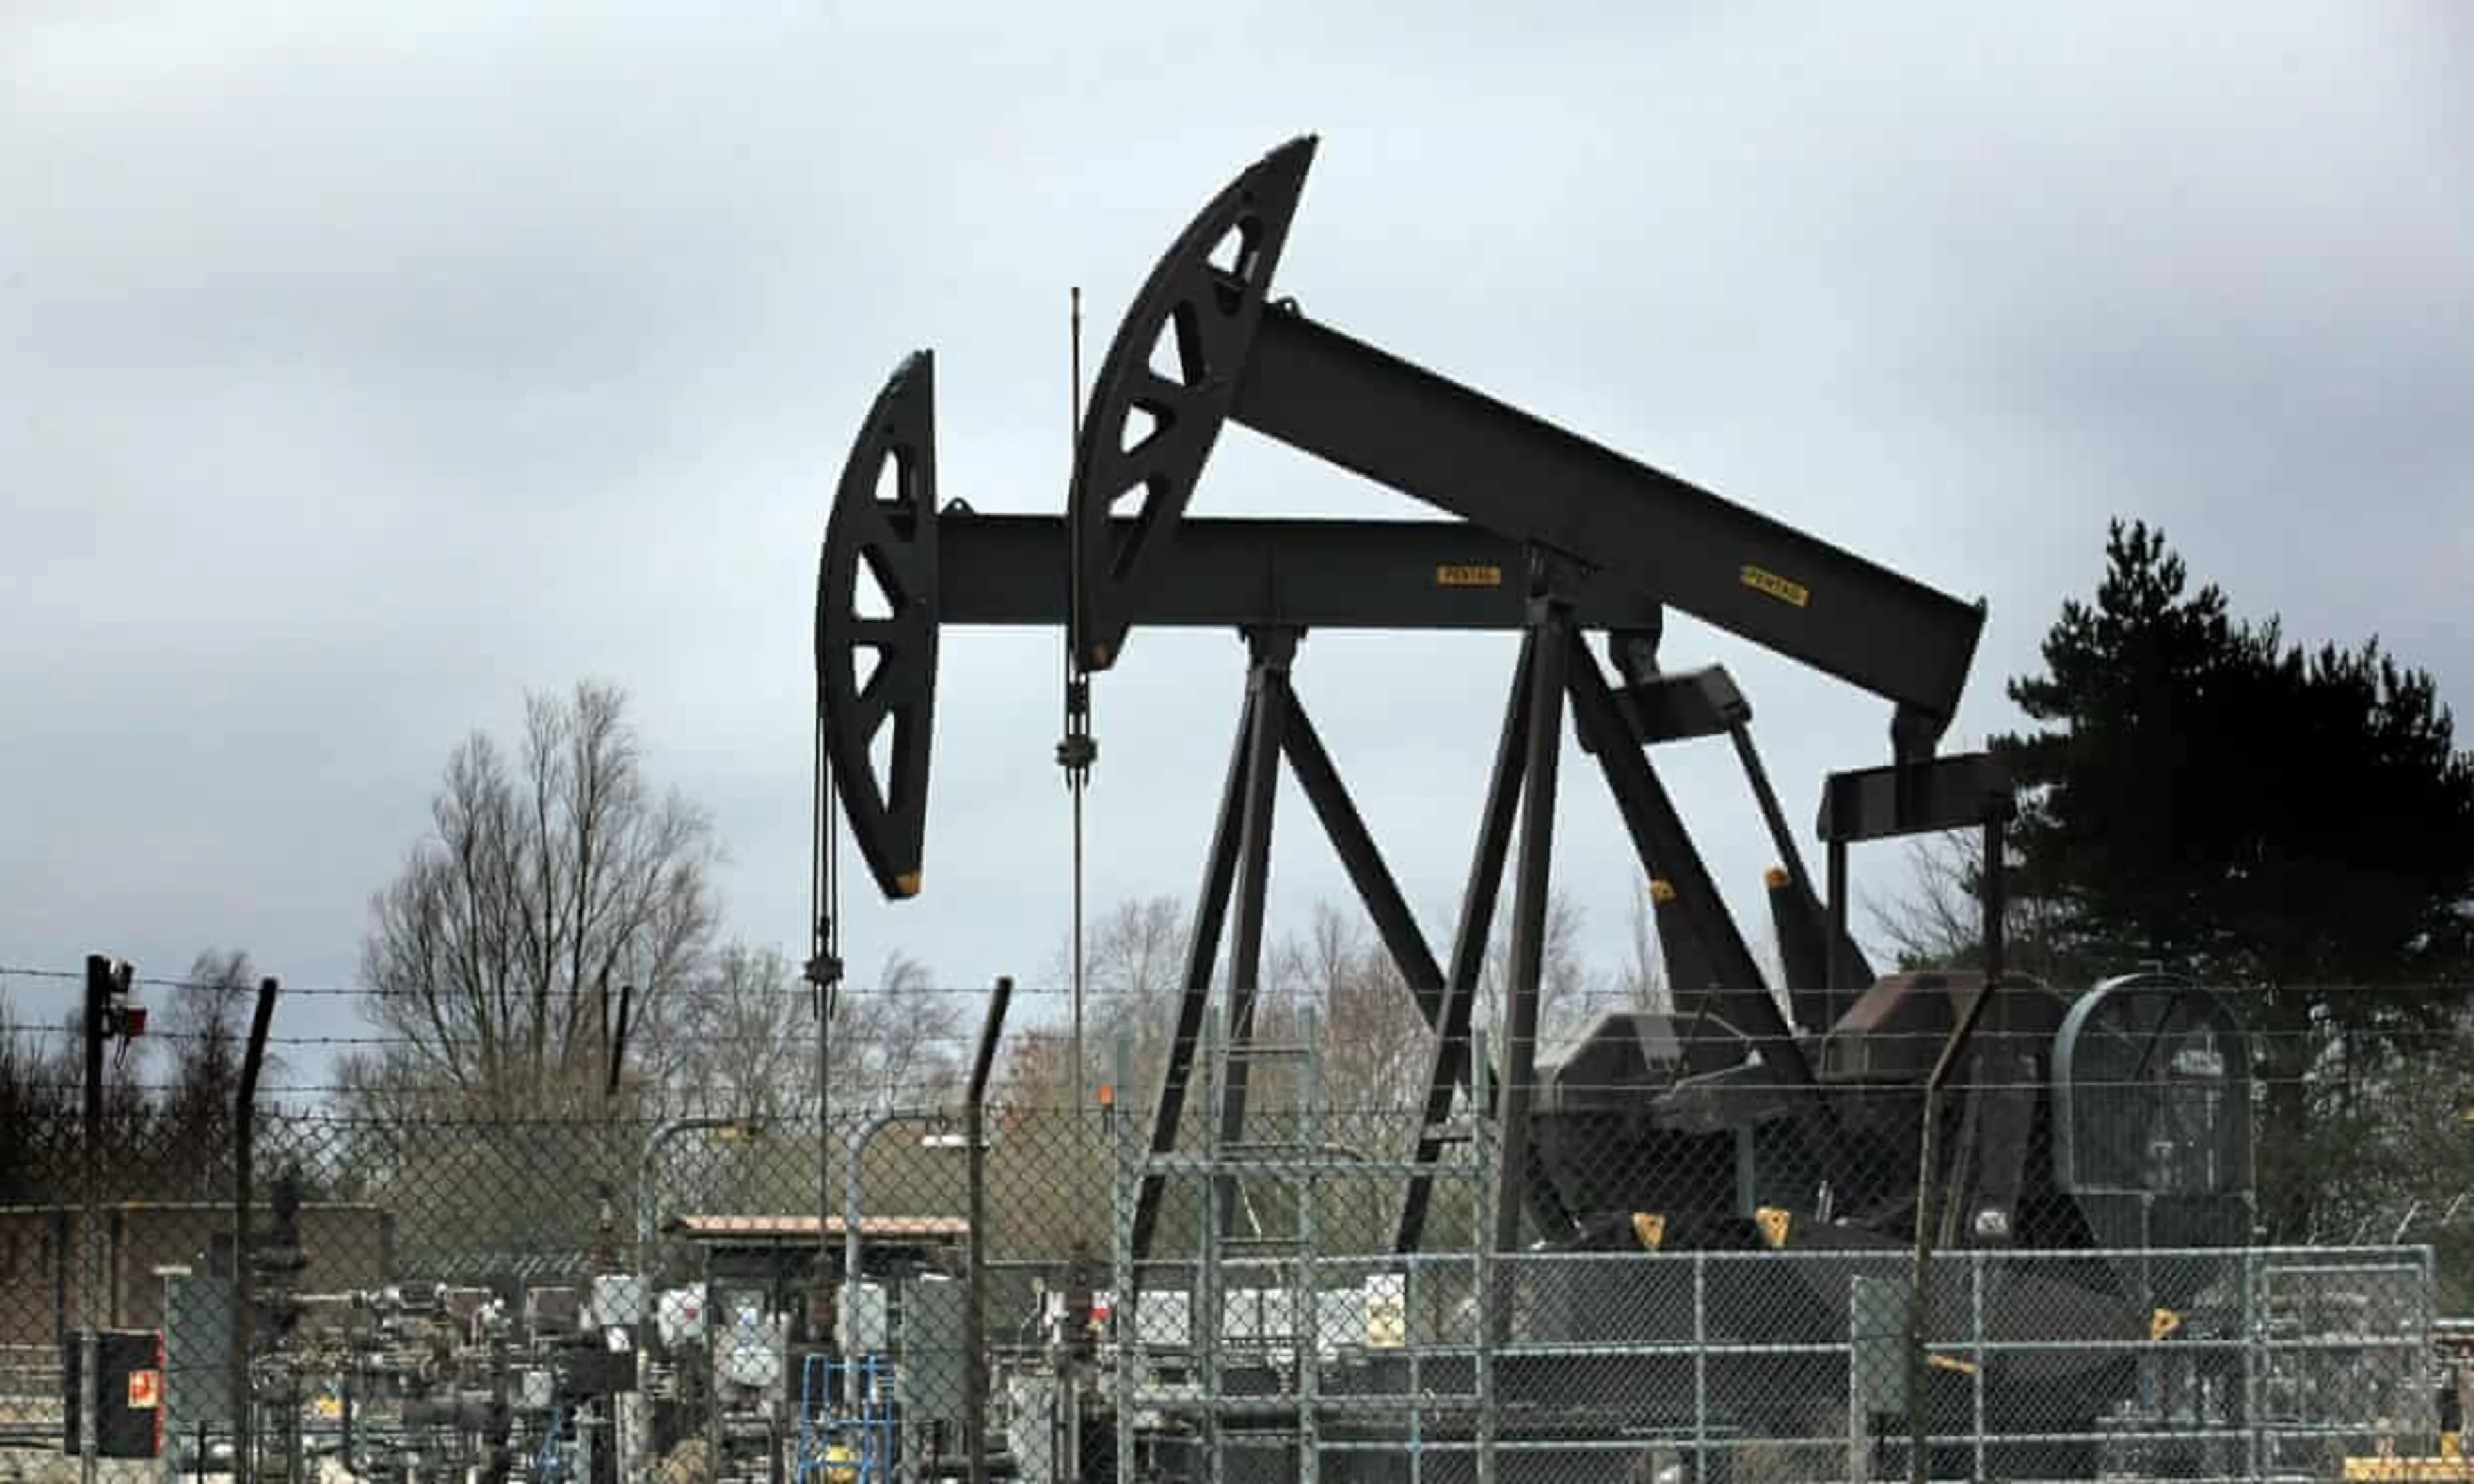 Oil wells into carbon capture sites